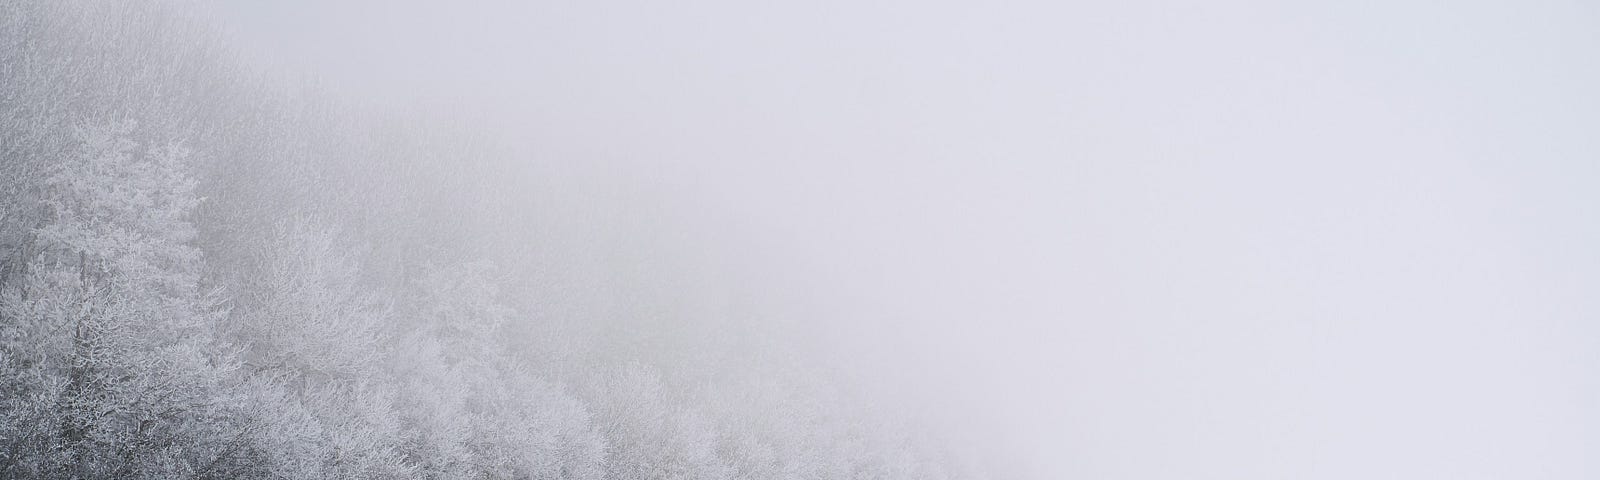 A snowy landscape